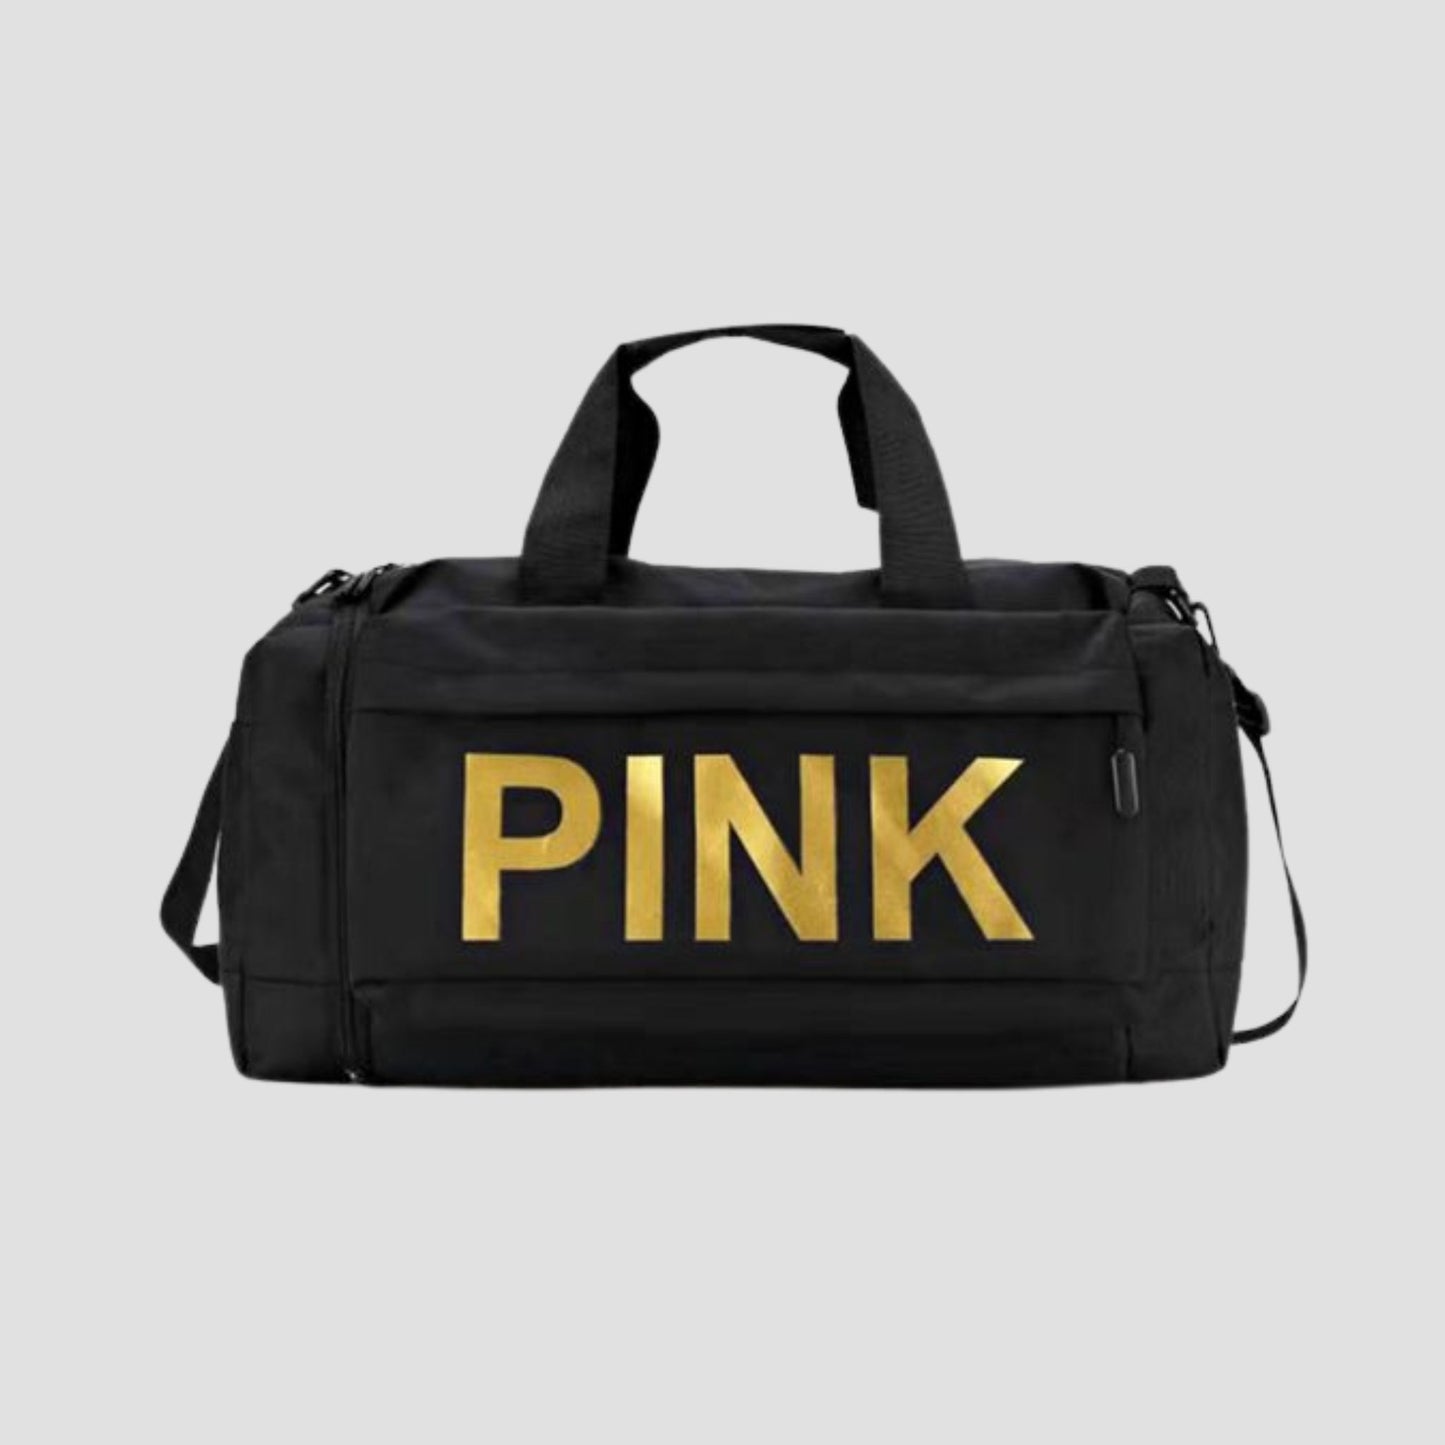 Black A081 PINK Duffel Bag